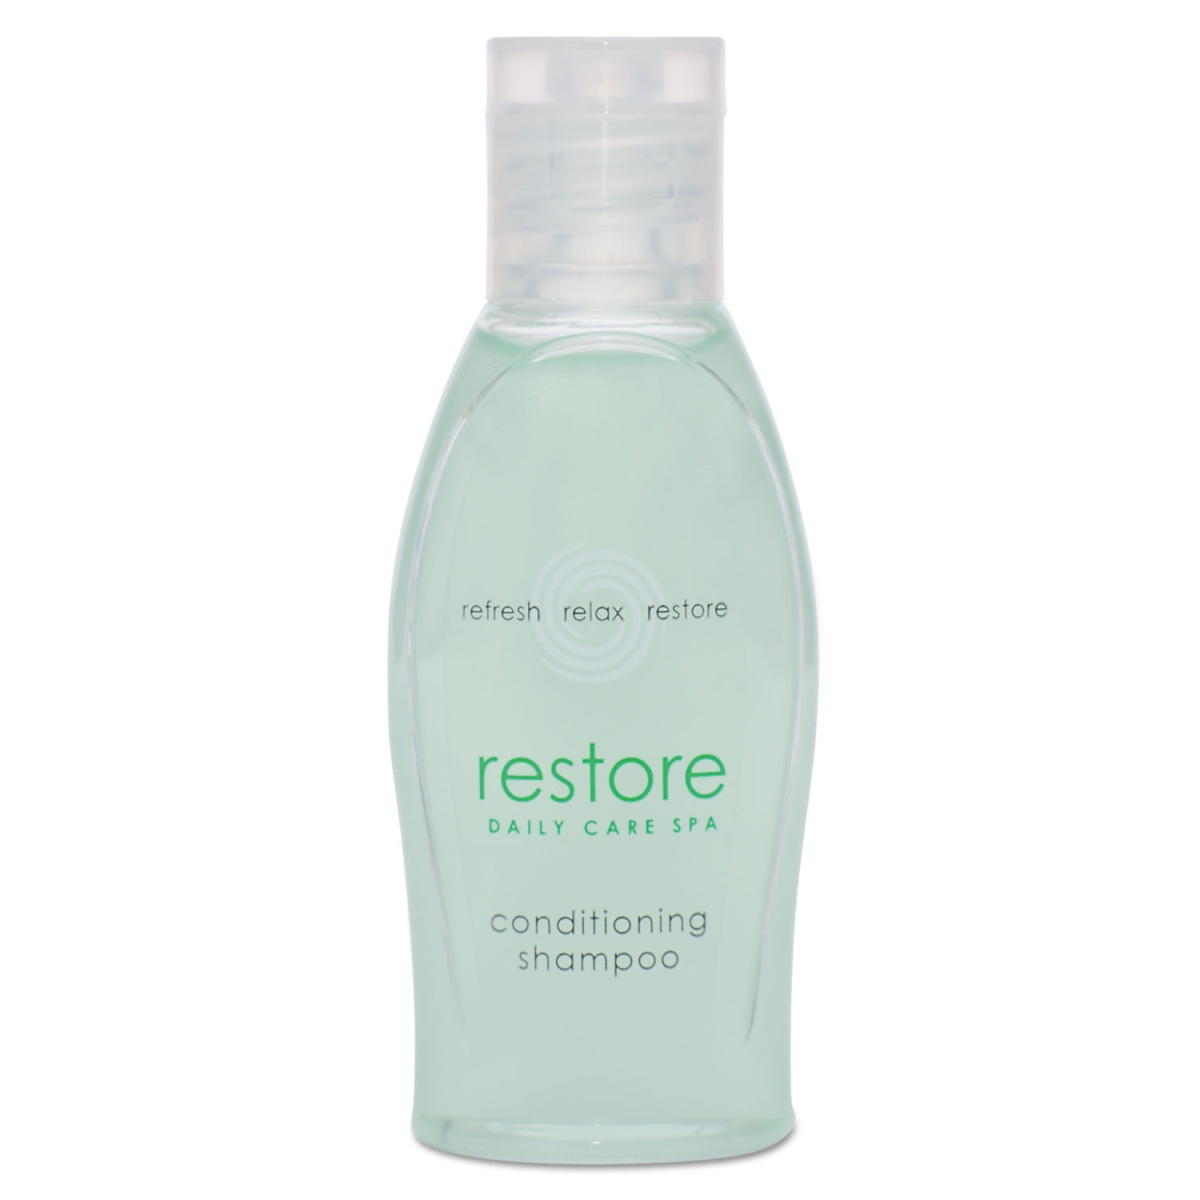 06026 1 Oz Bottle Restore Conditioning Shampoo Aloe Clean Scent - 288 Per Case